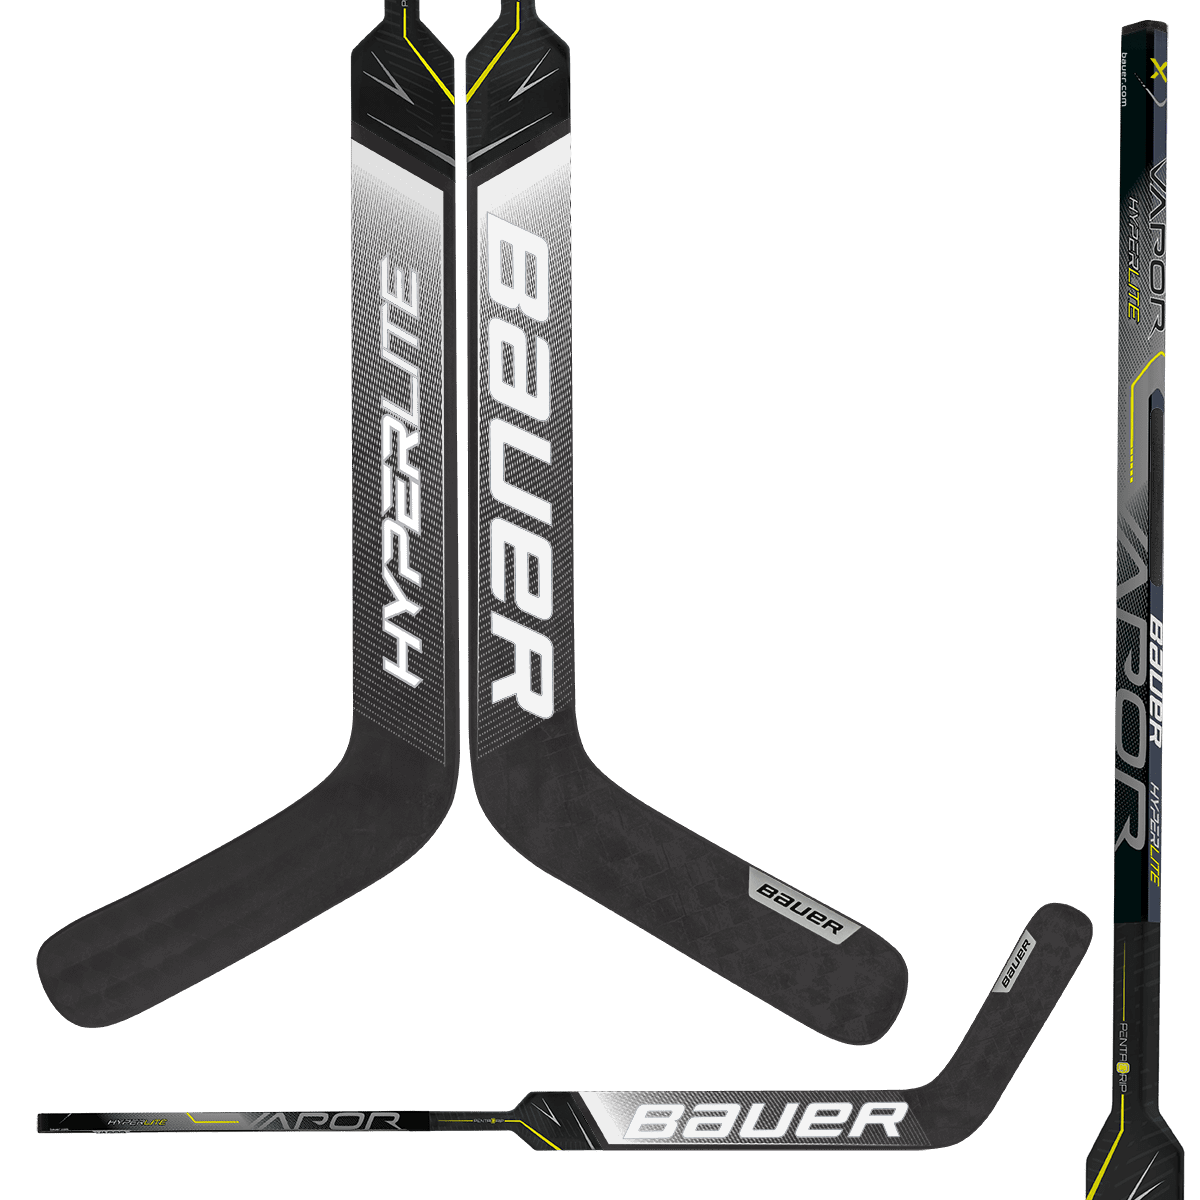 Bauer Vapor HyperLite Composite Goalie Stick - Custom Design Black/White Inspiration